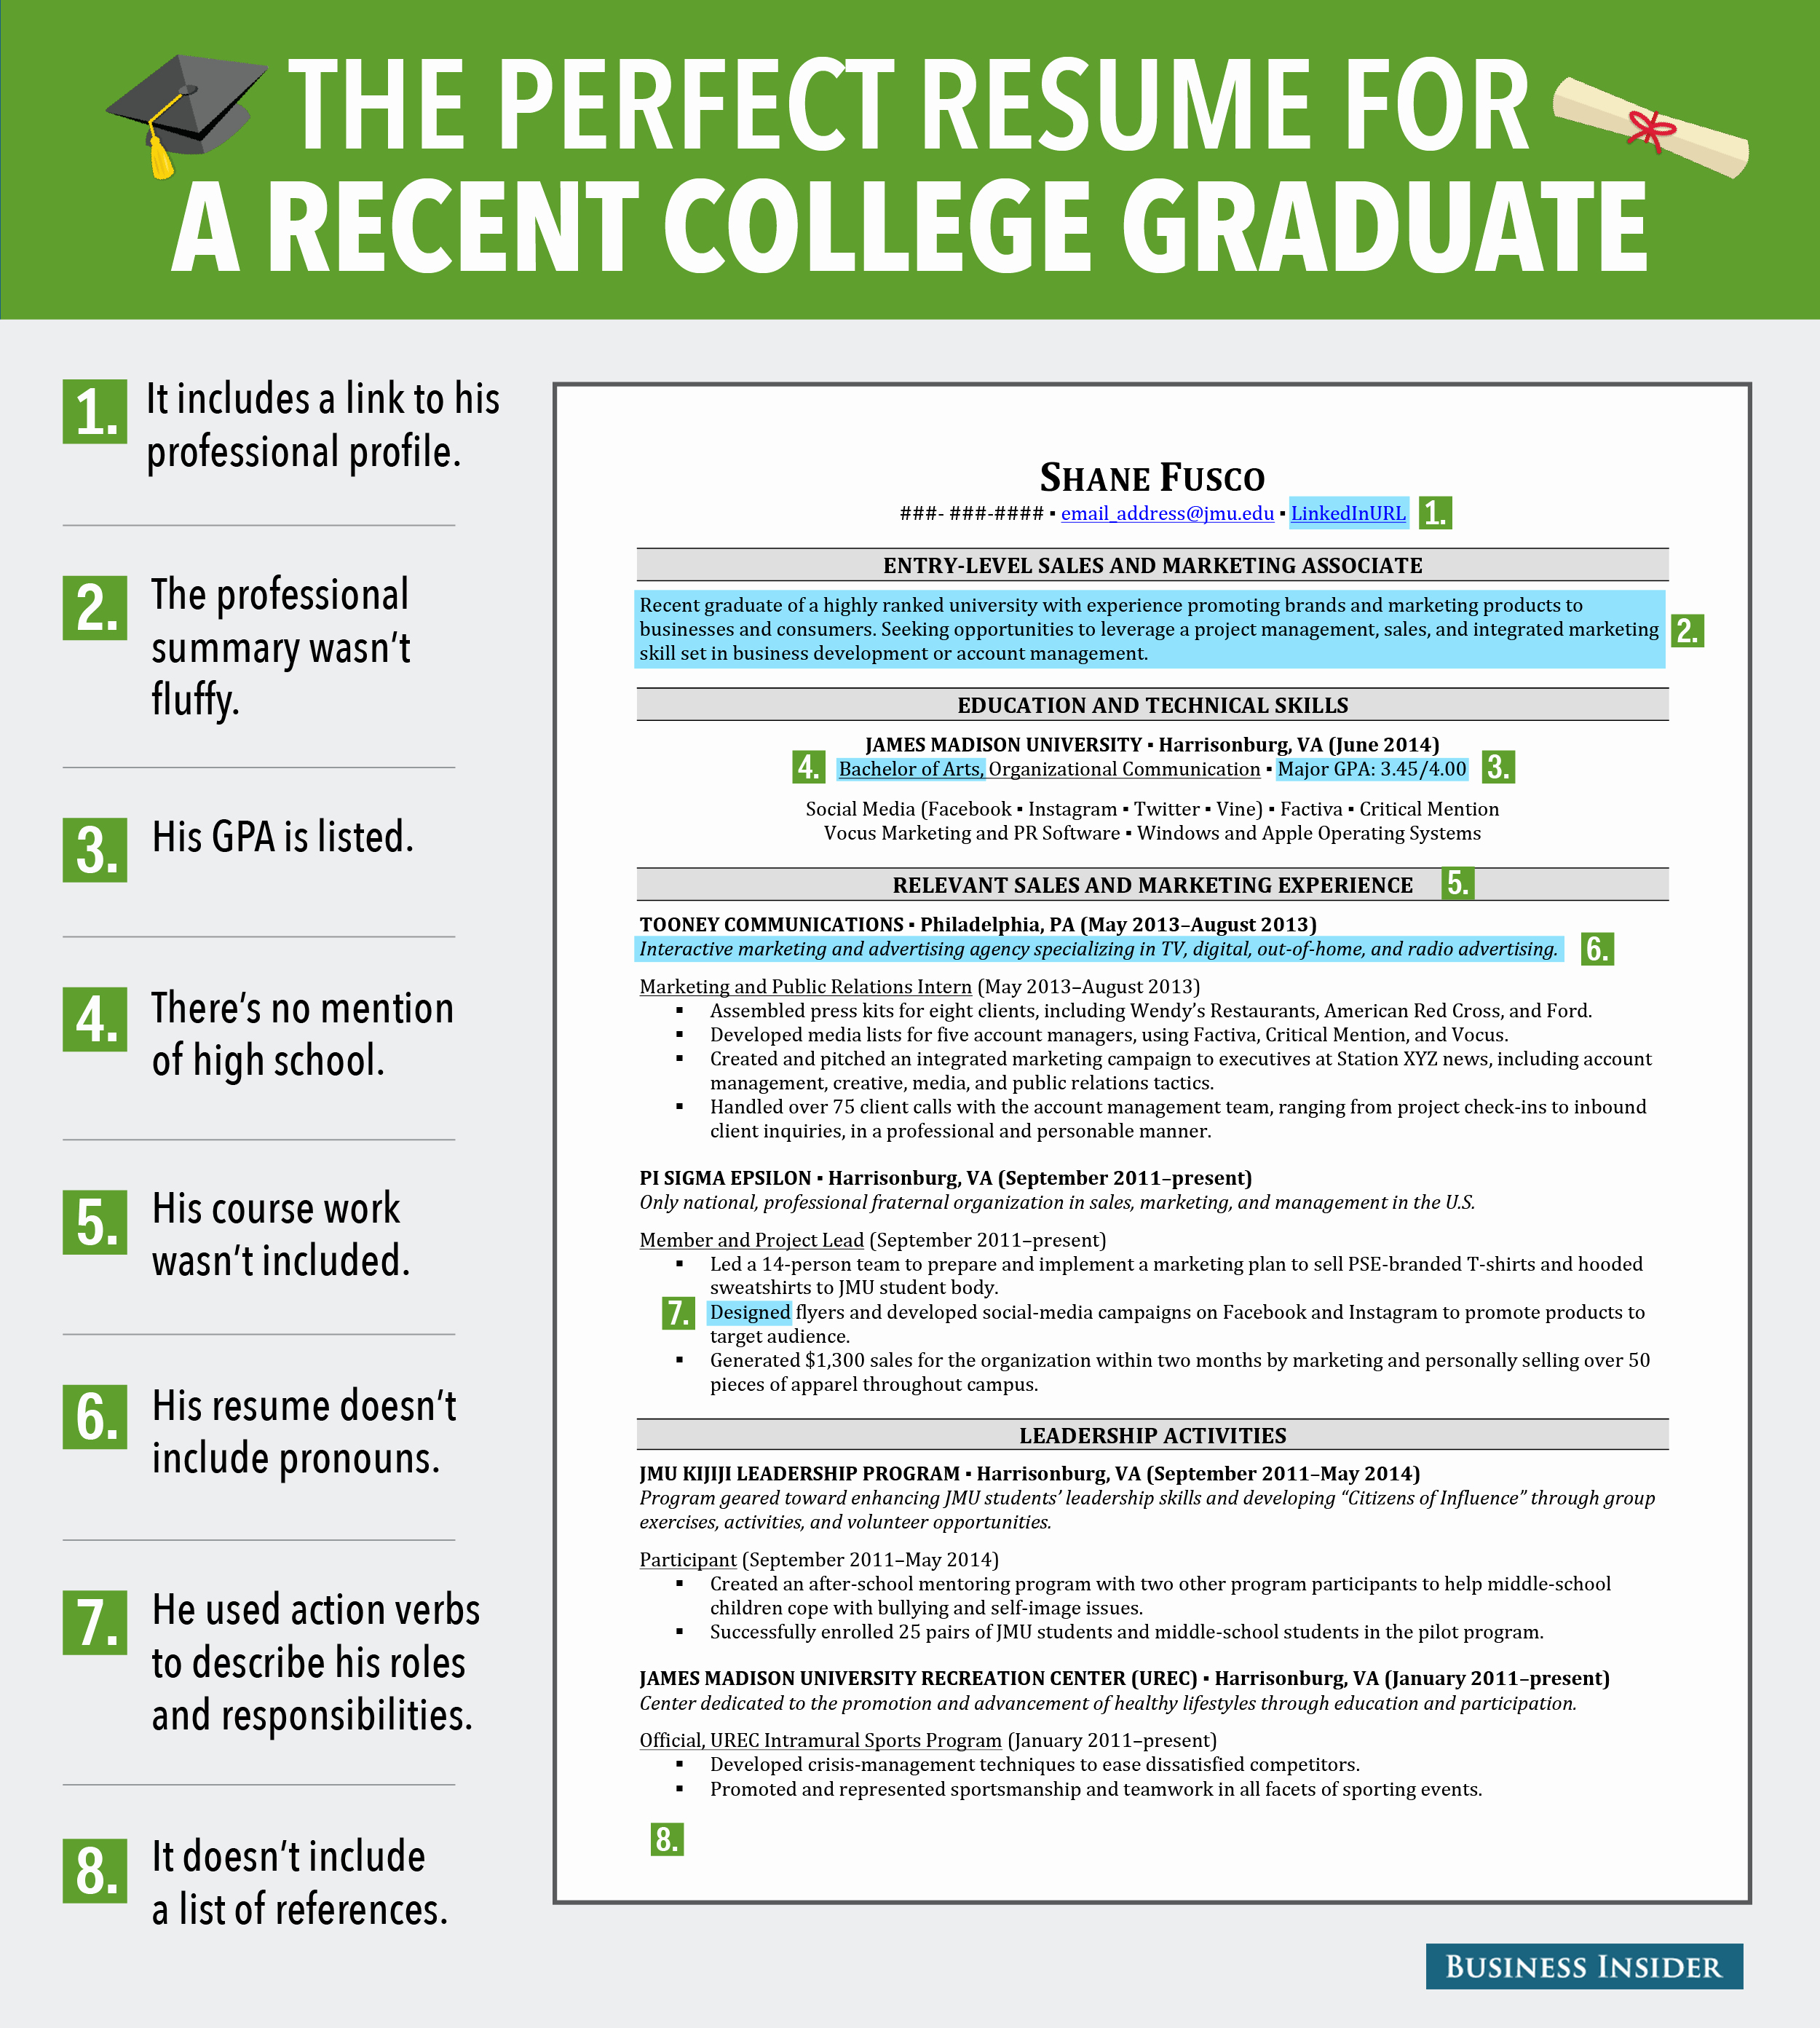 Resume for Recent College Grads Inspirational Excellent Resume for Recent Grad Business Insider